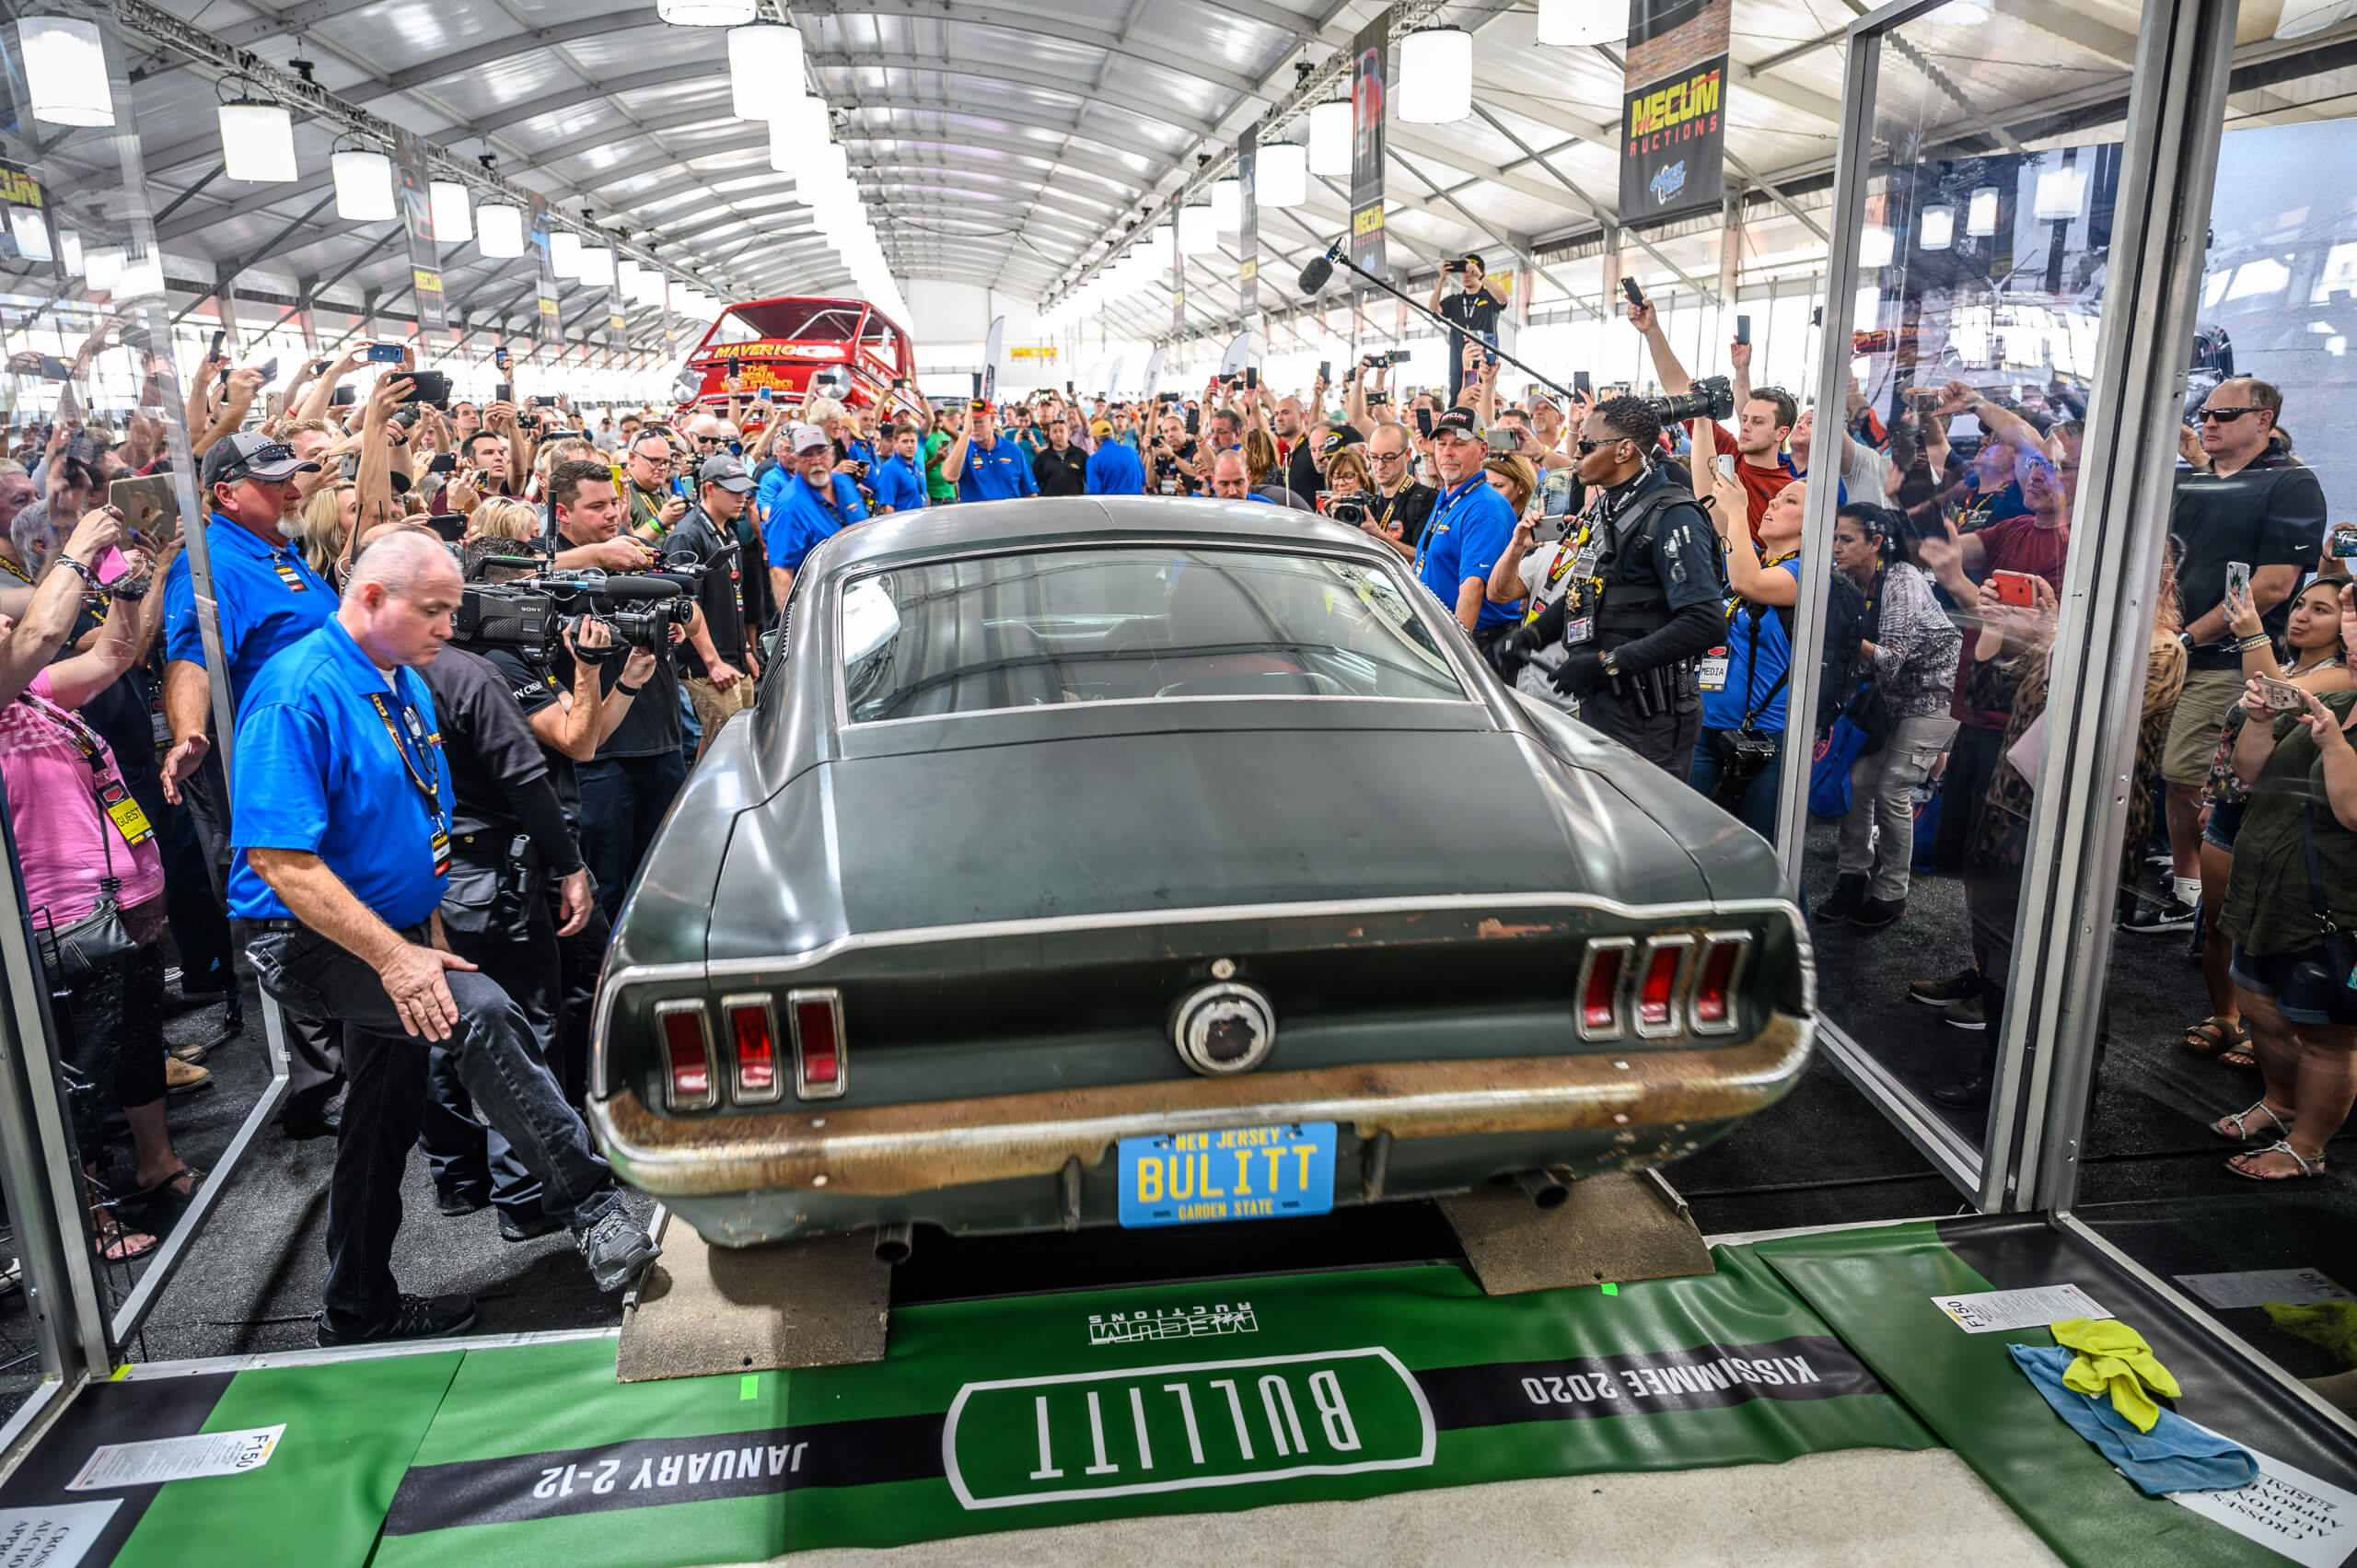 The 1968 Ford Mustang Bullitt car crossed the Mecum block, bringing millions.